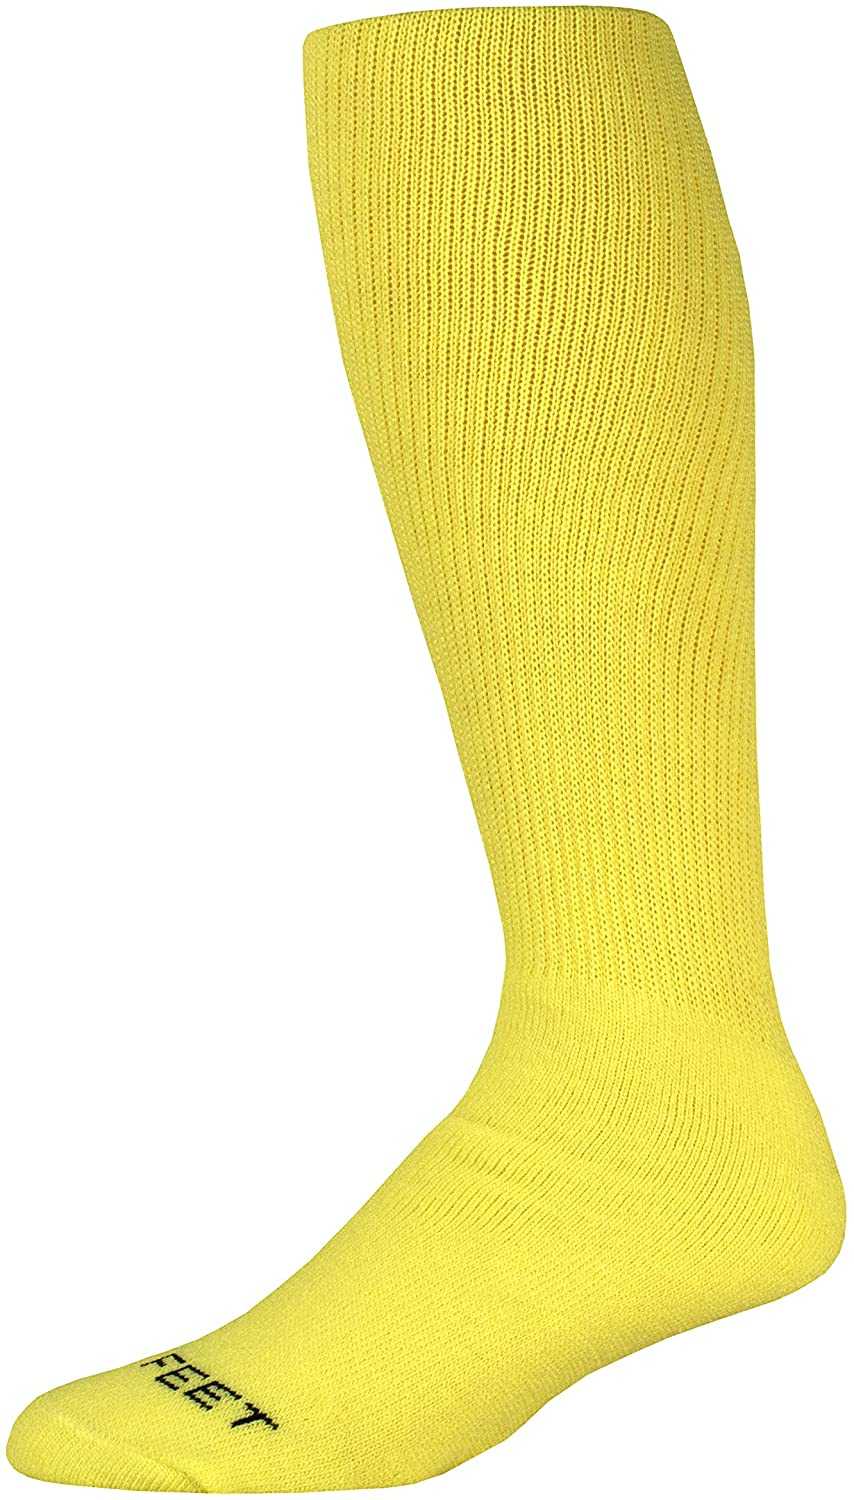 Pro Feet 294-296 Active Knee High Socks - Neon Yellow - HIT a Double